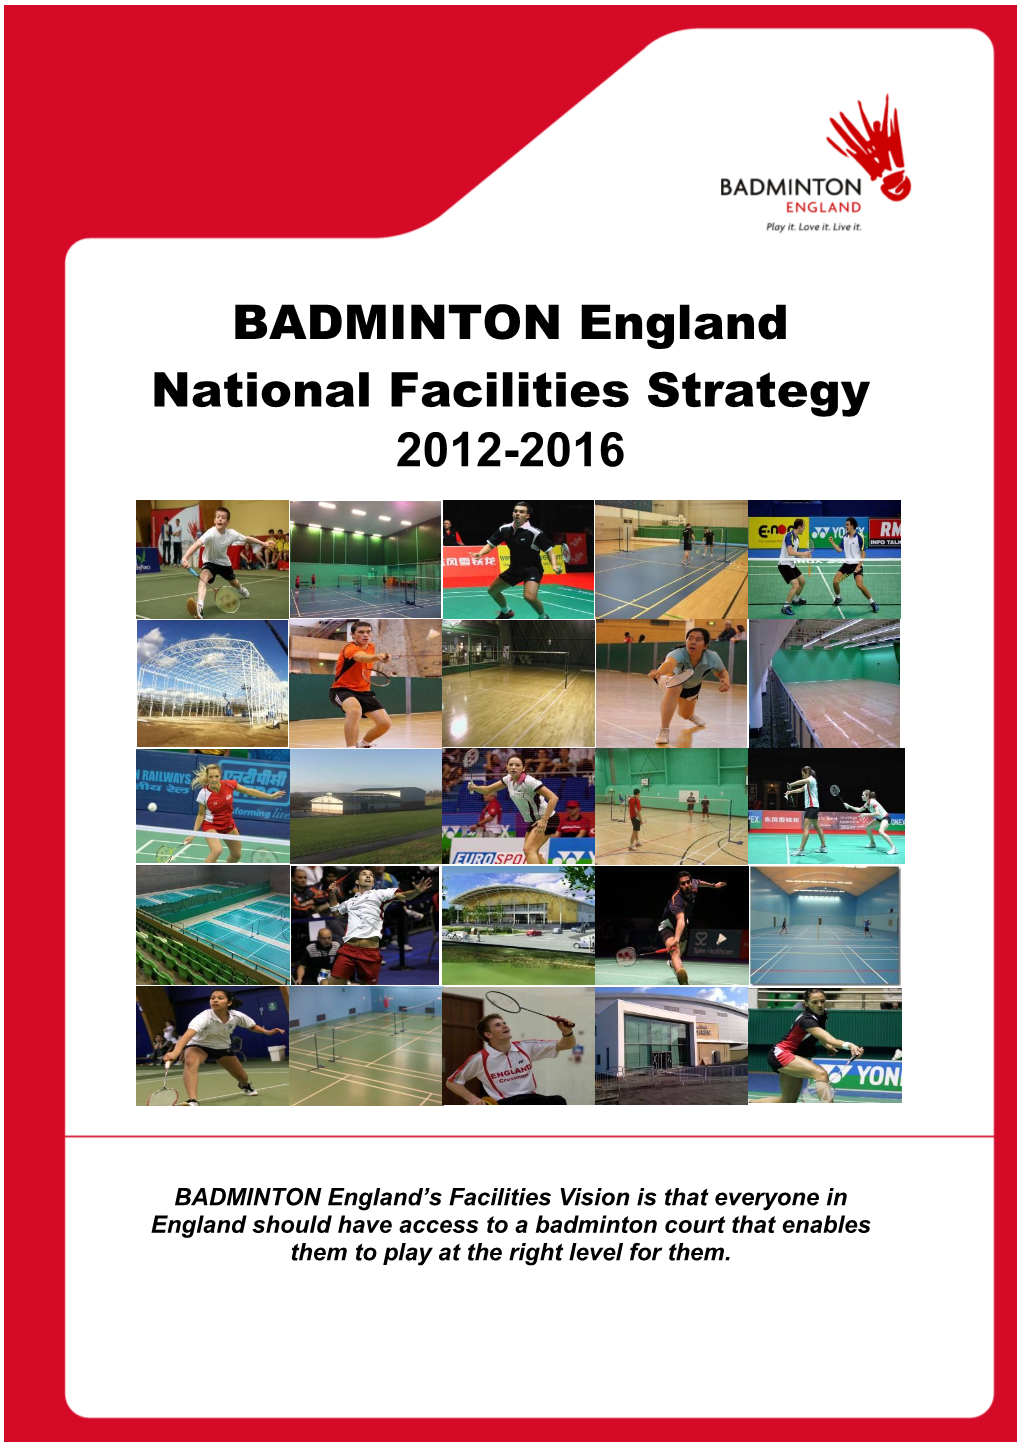 BADMINTON England National Facilities Strategy 2012-2016